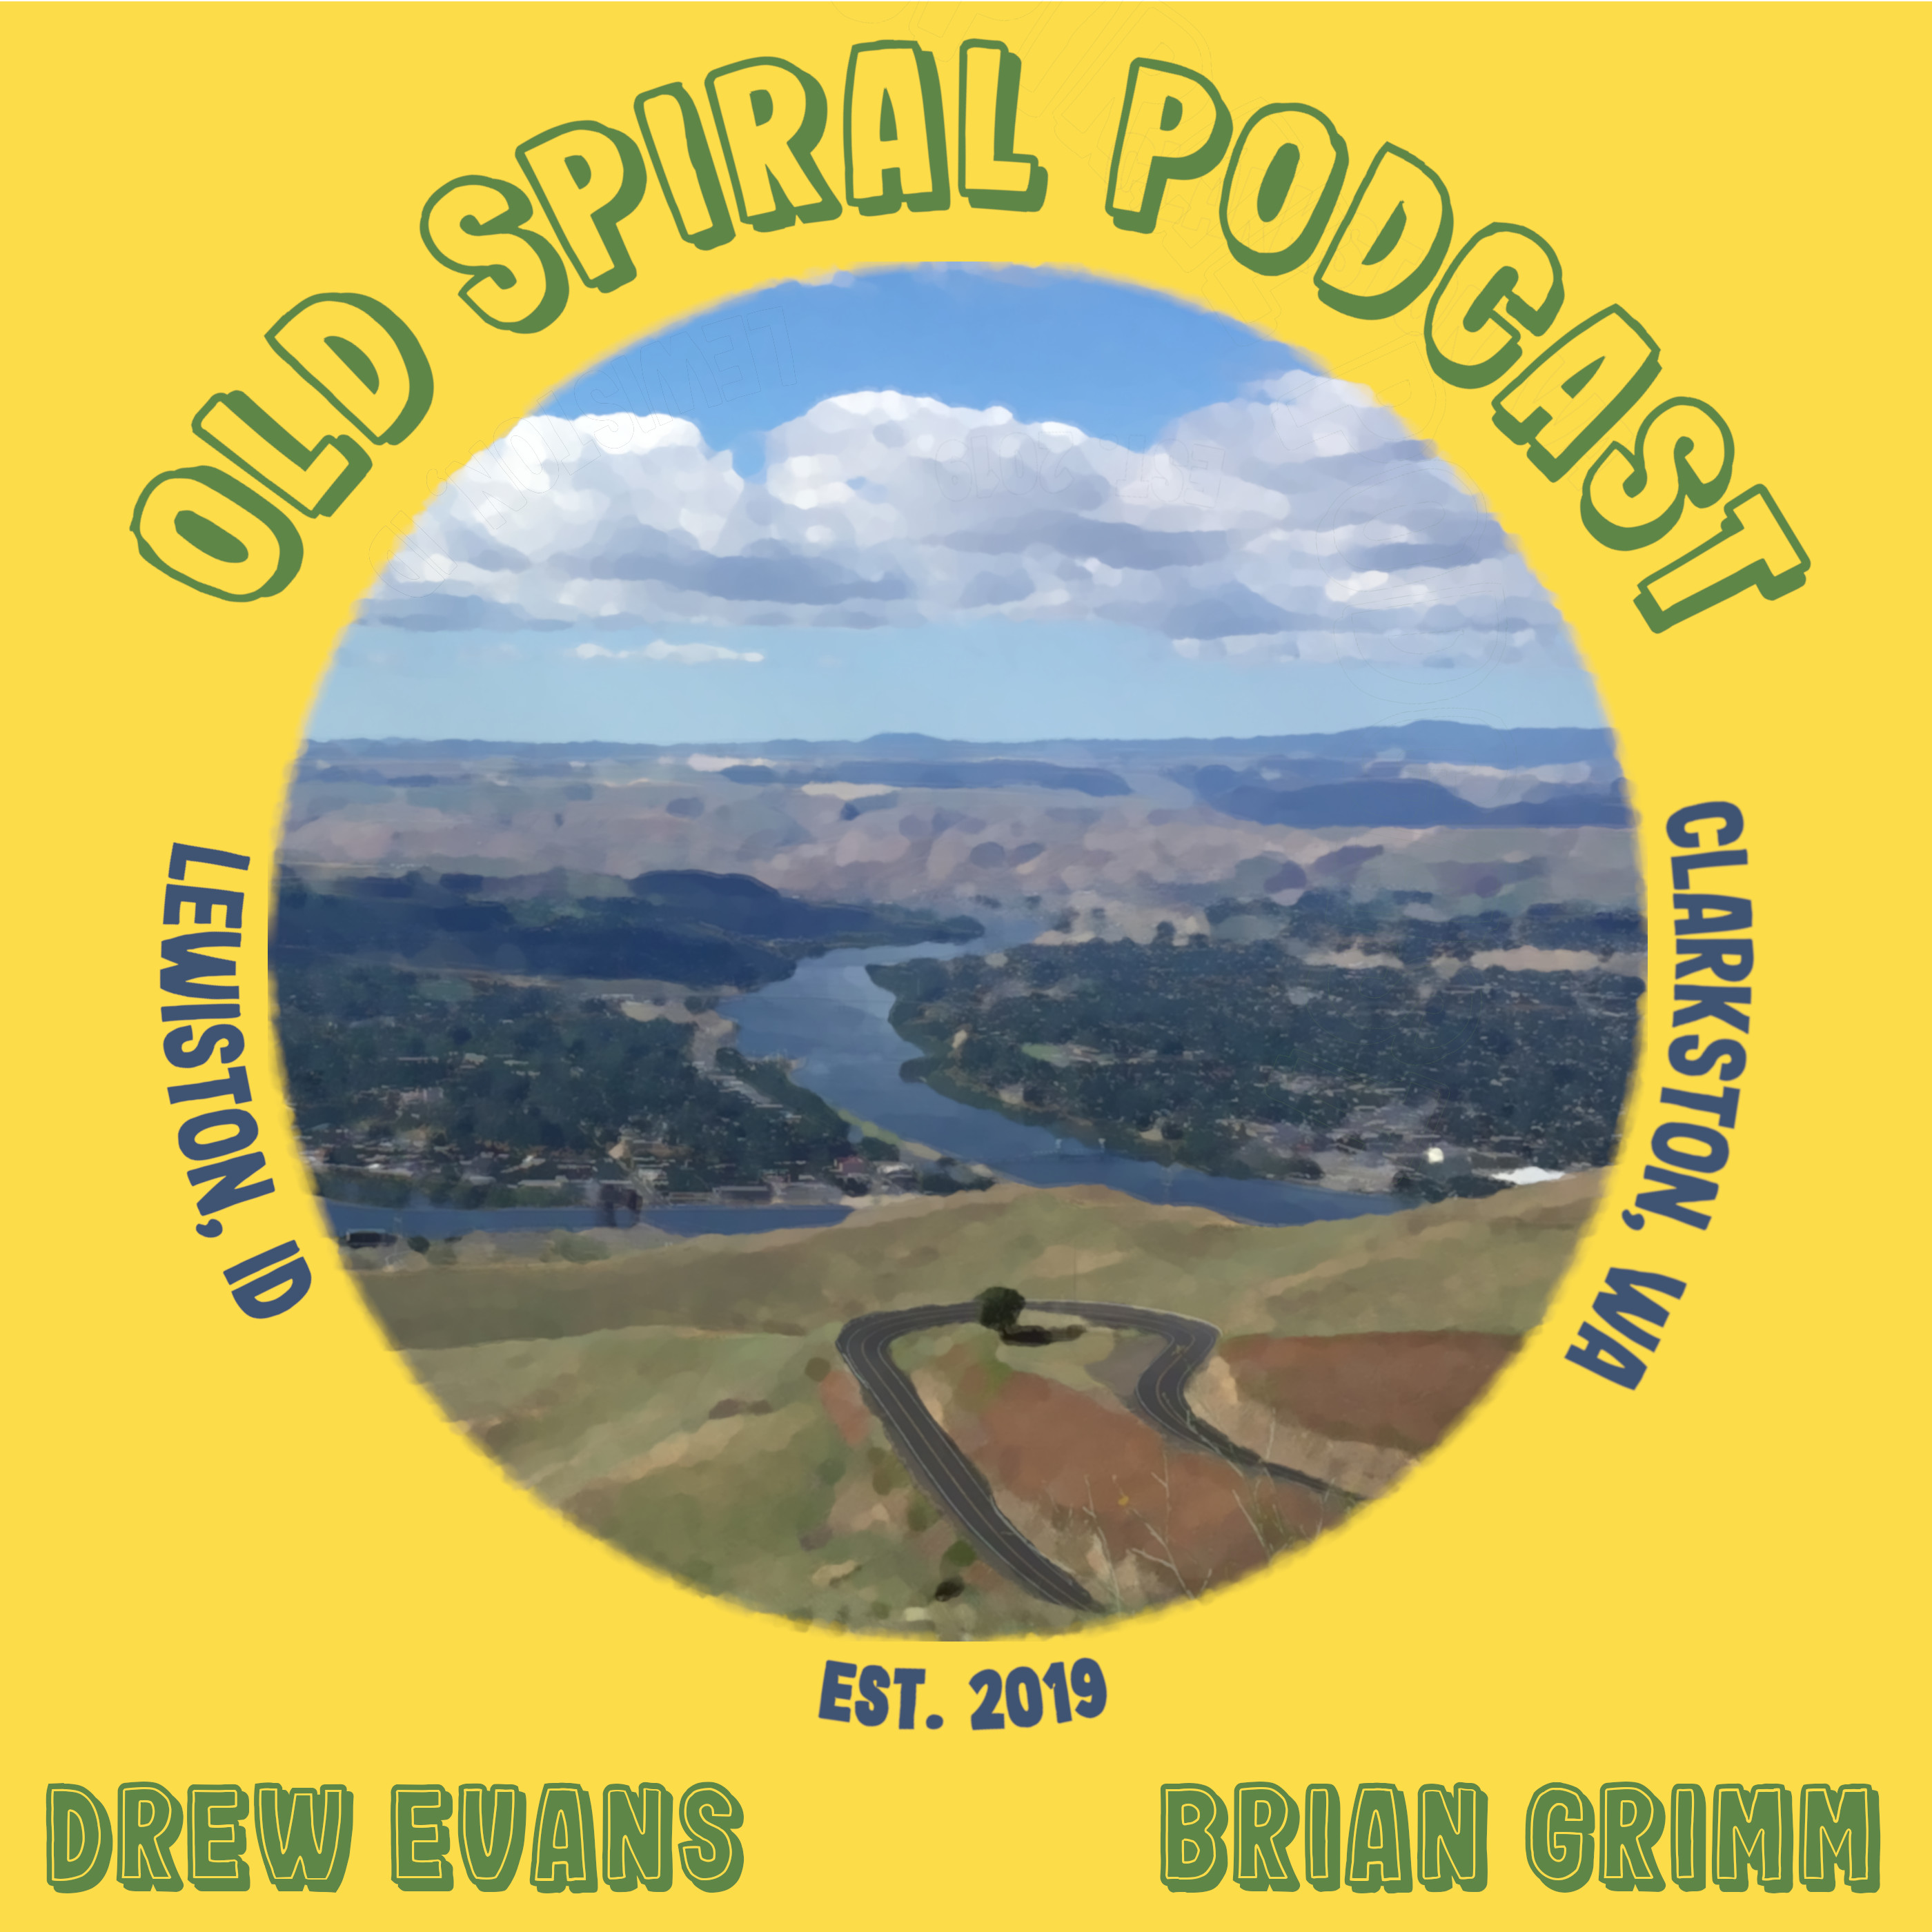 Old Spiral Podcast